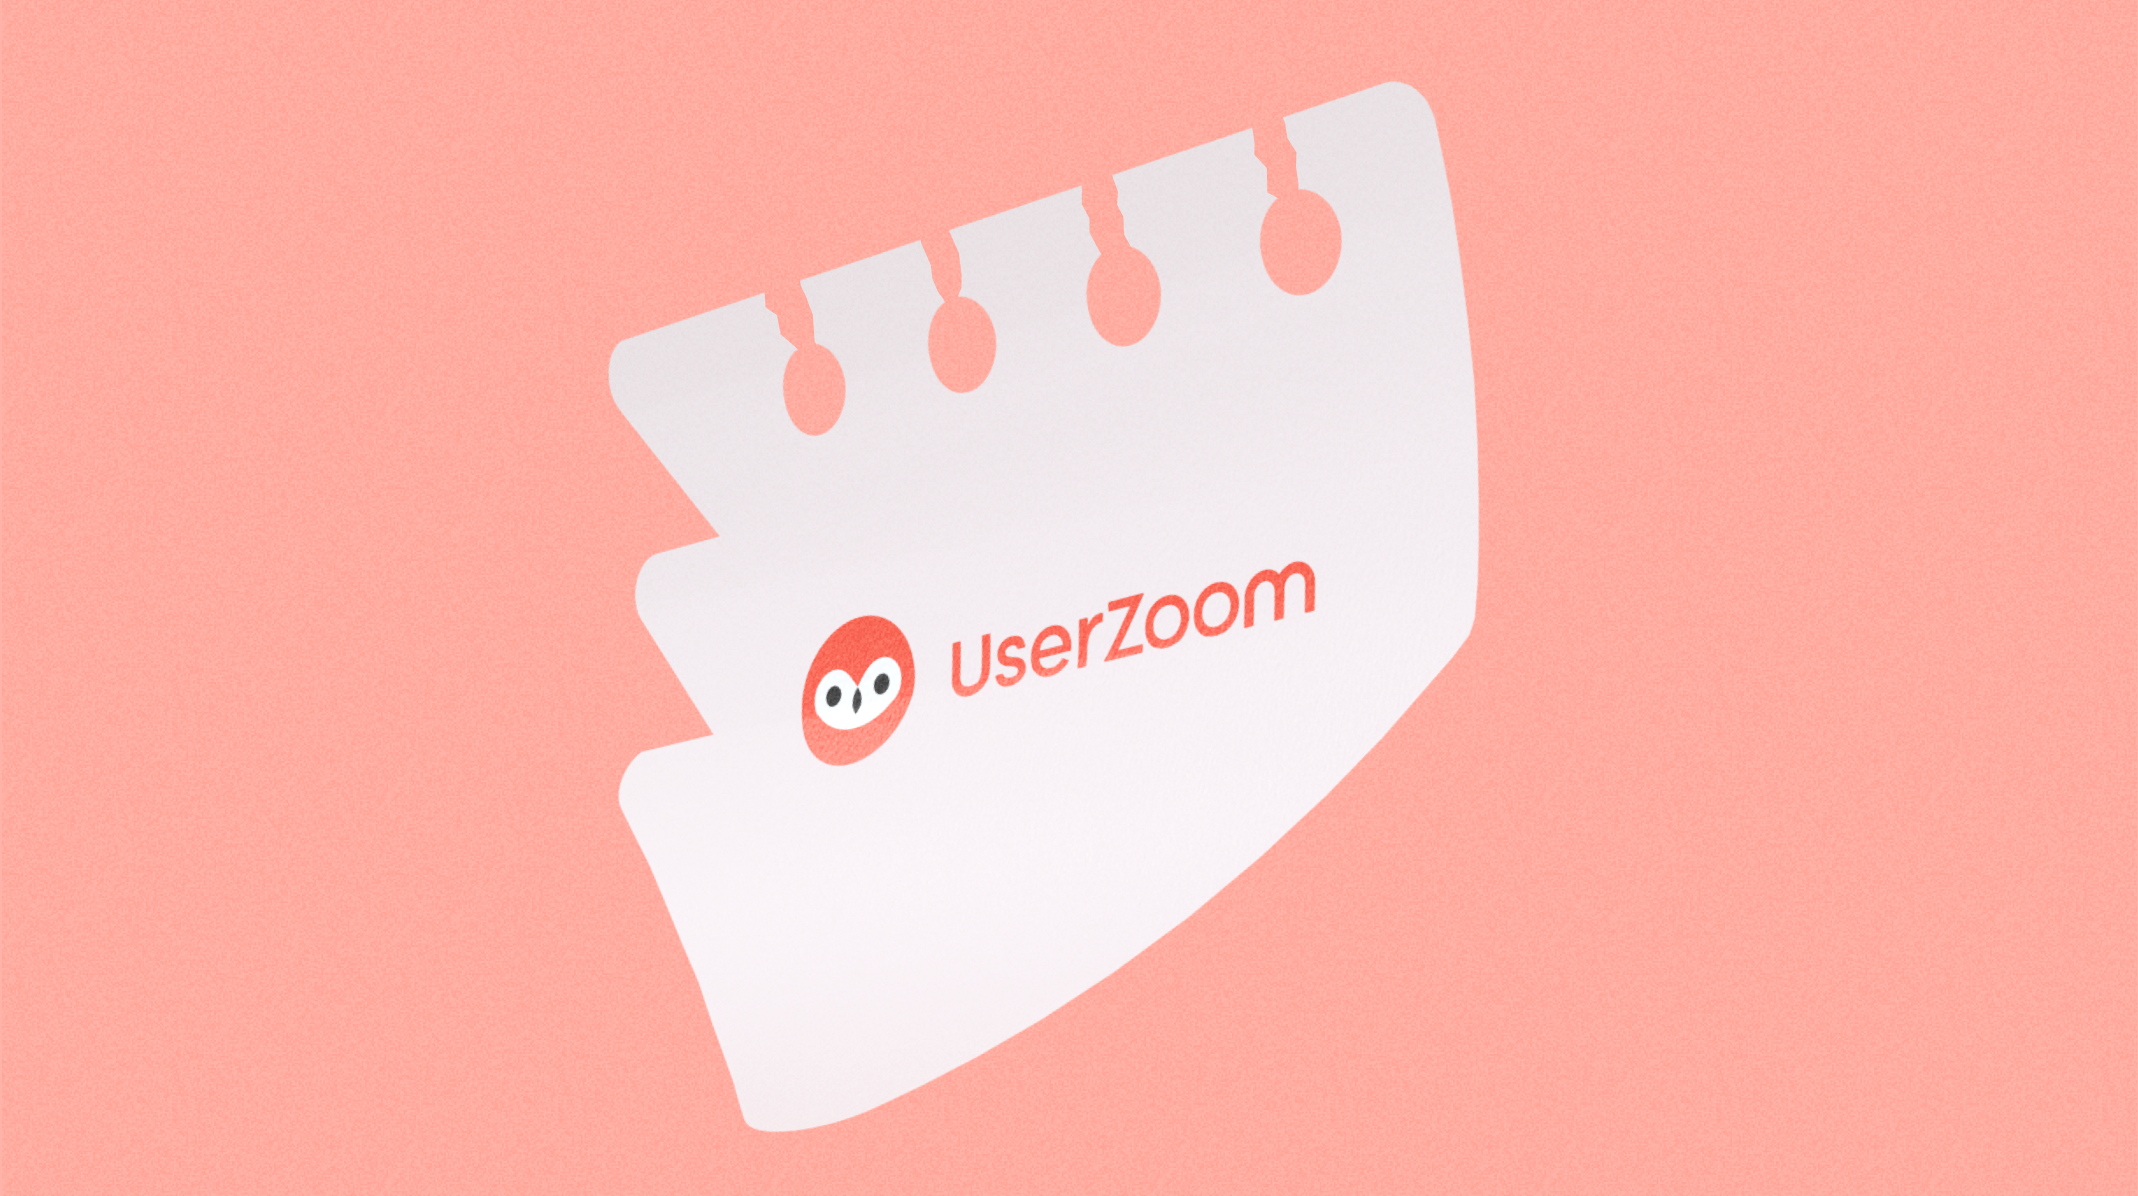 Userzoom usability testing